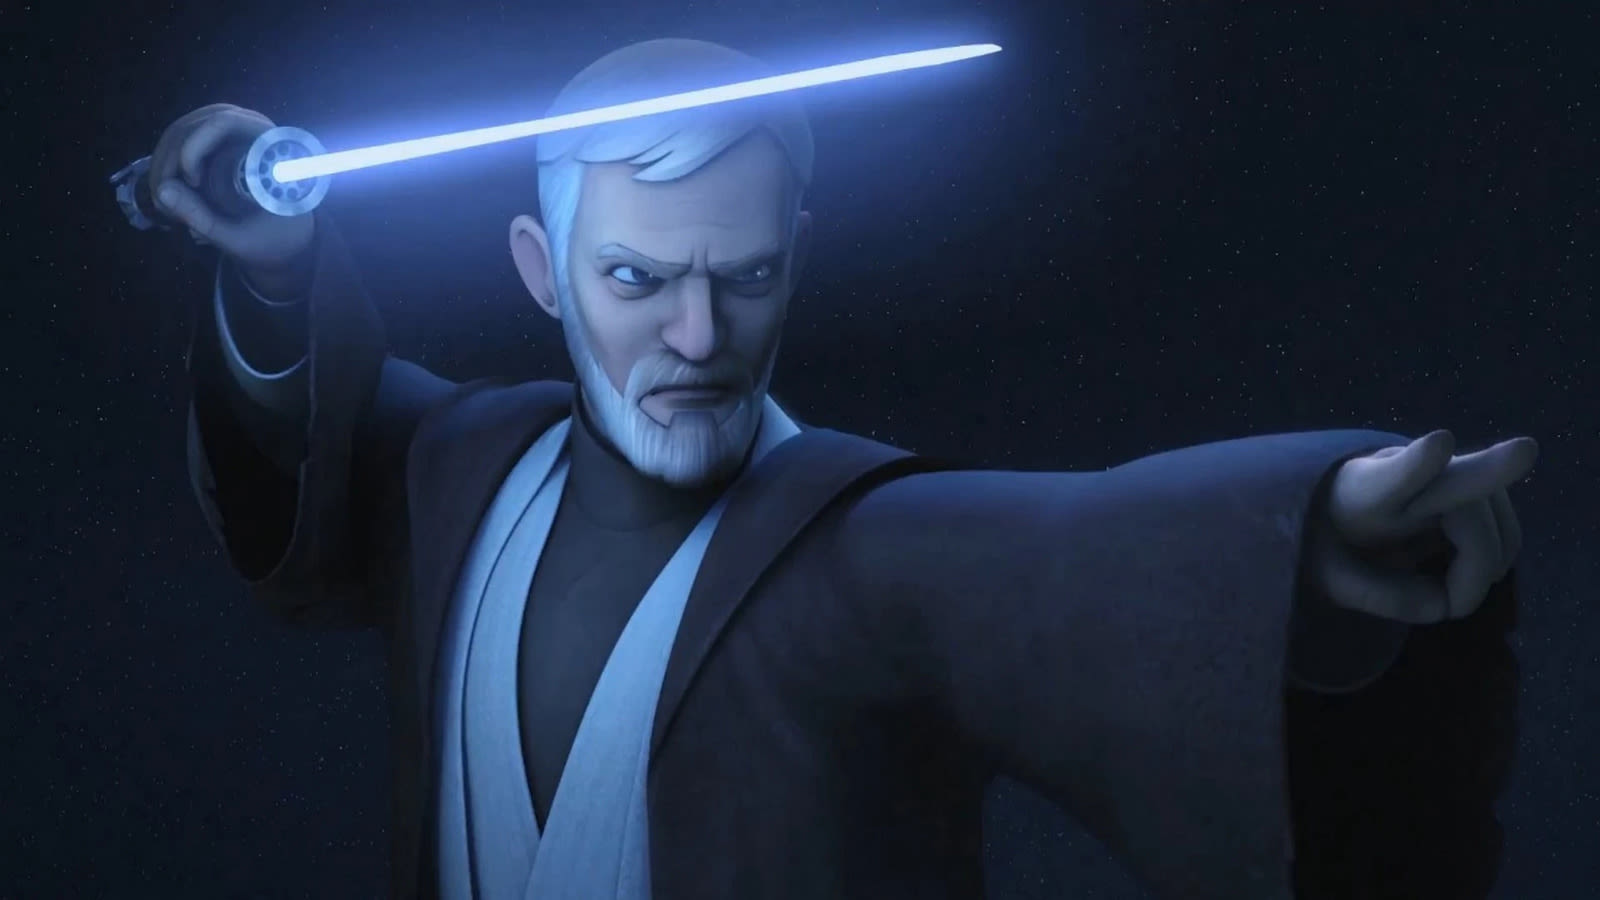 Obi-Wan's Fighting Style In Rebels Is A Thoughtful, Evolutionary Star Wars Easter Egg - SlashFilm